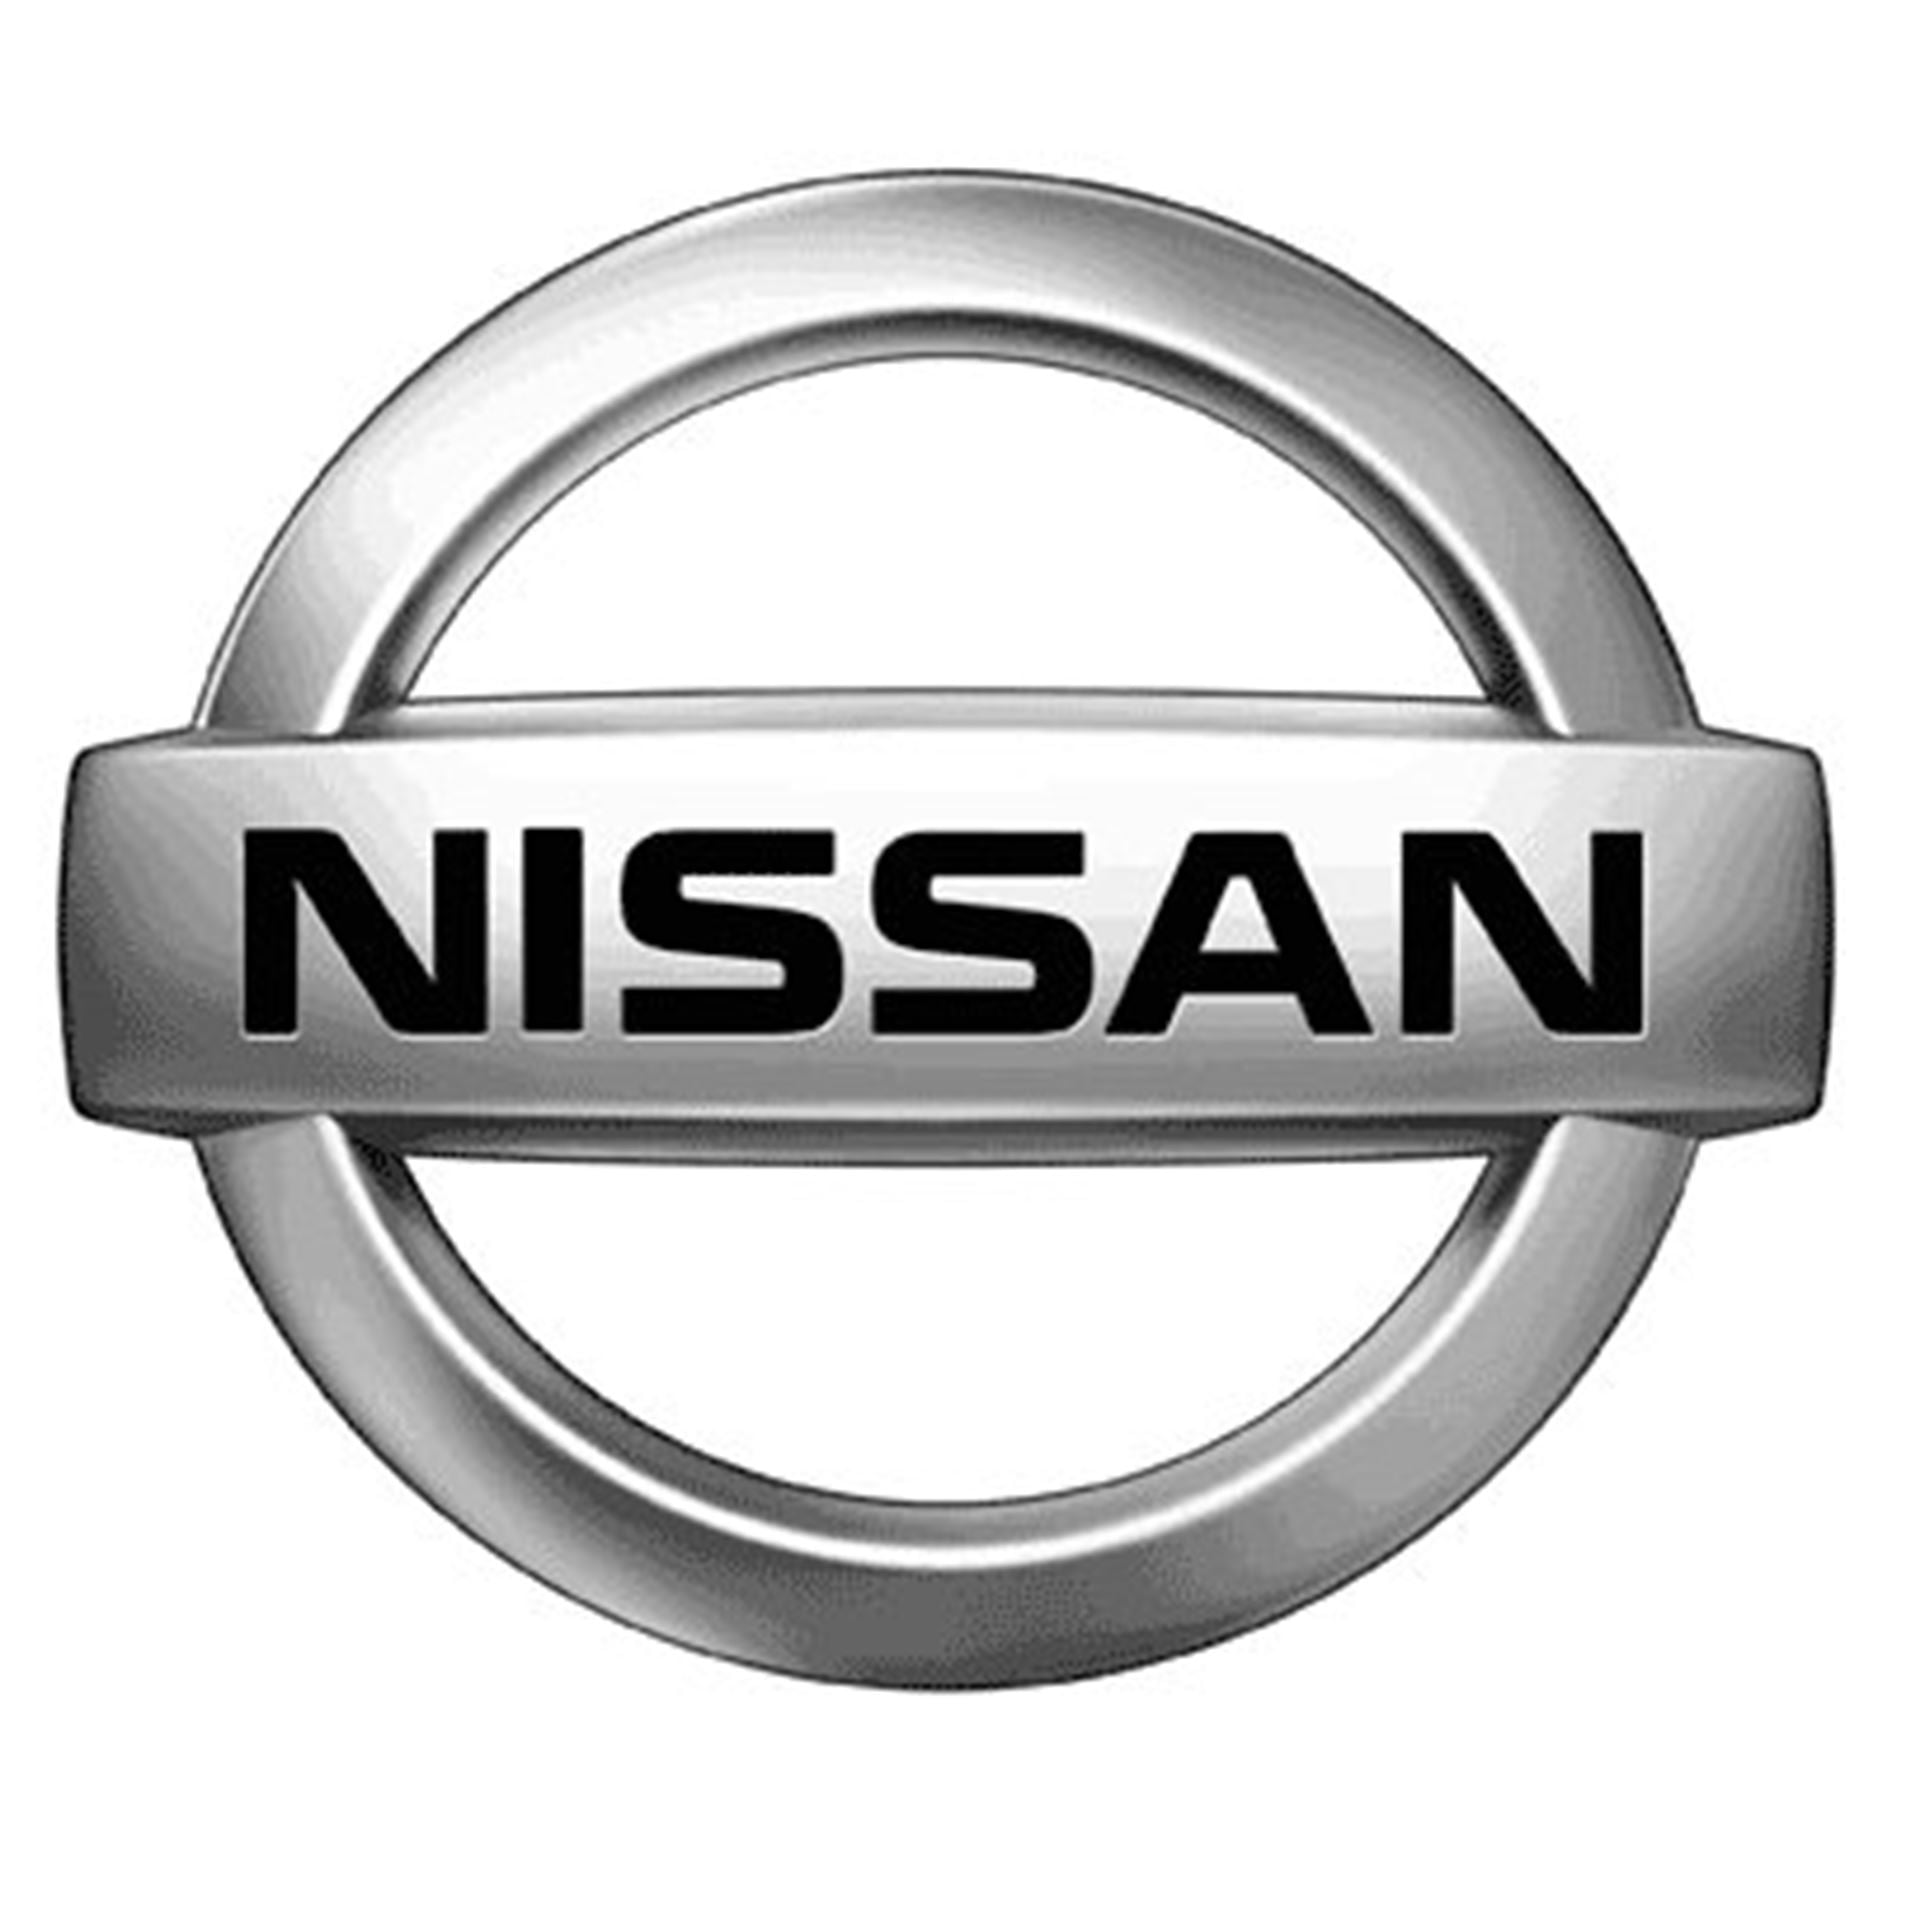 Nissan Corporate Social Responsibility Programme